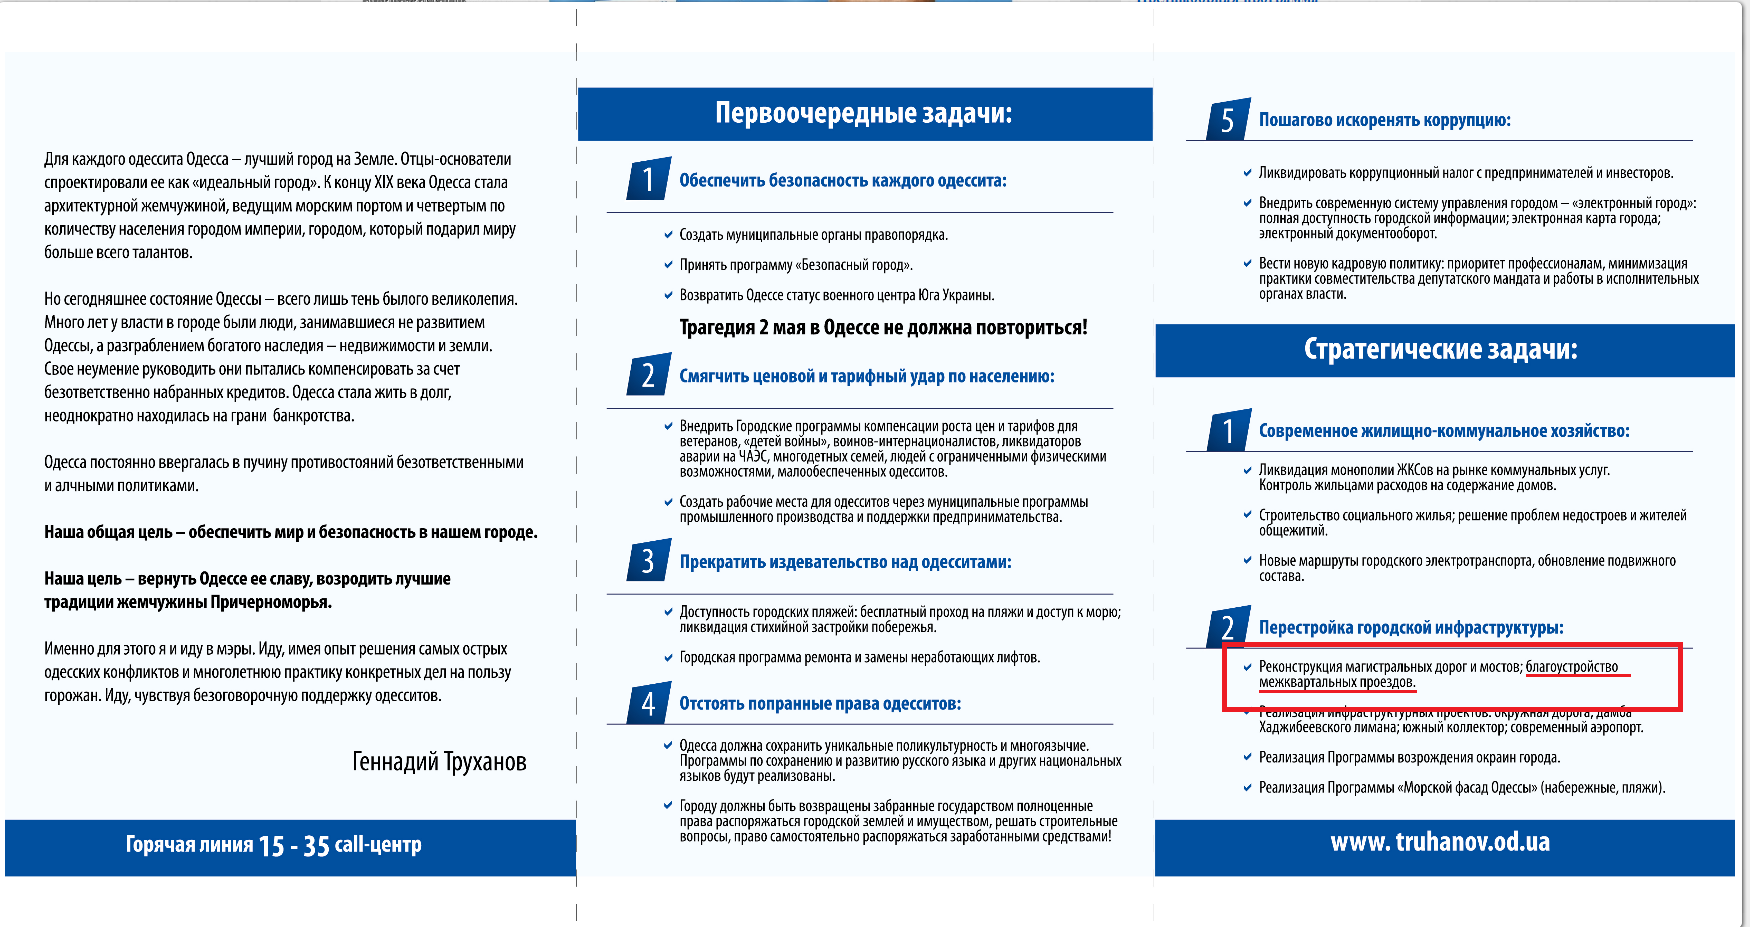 http://www.truhanov.od.ua/ru/about/predvibornaya-programma/